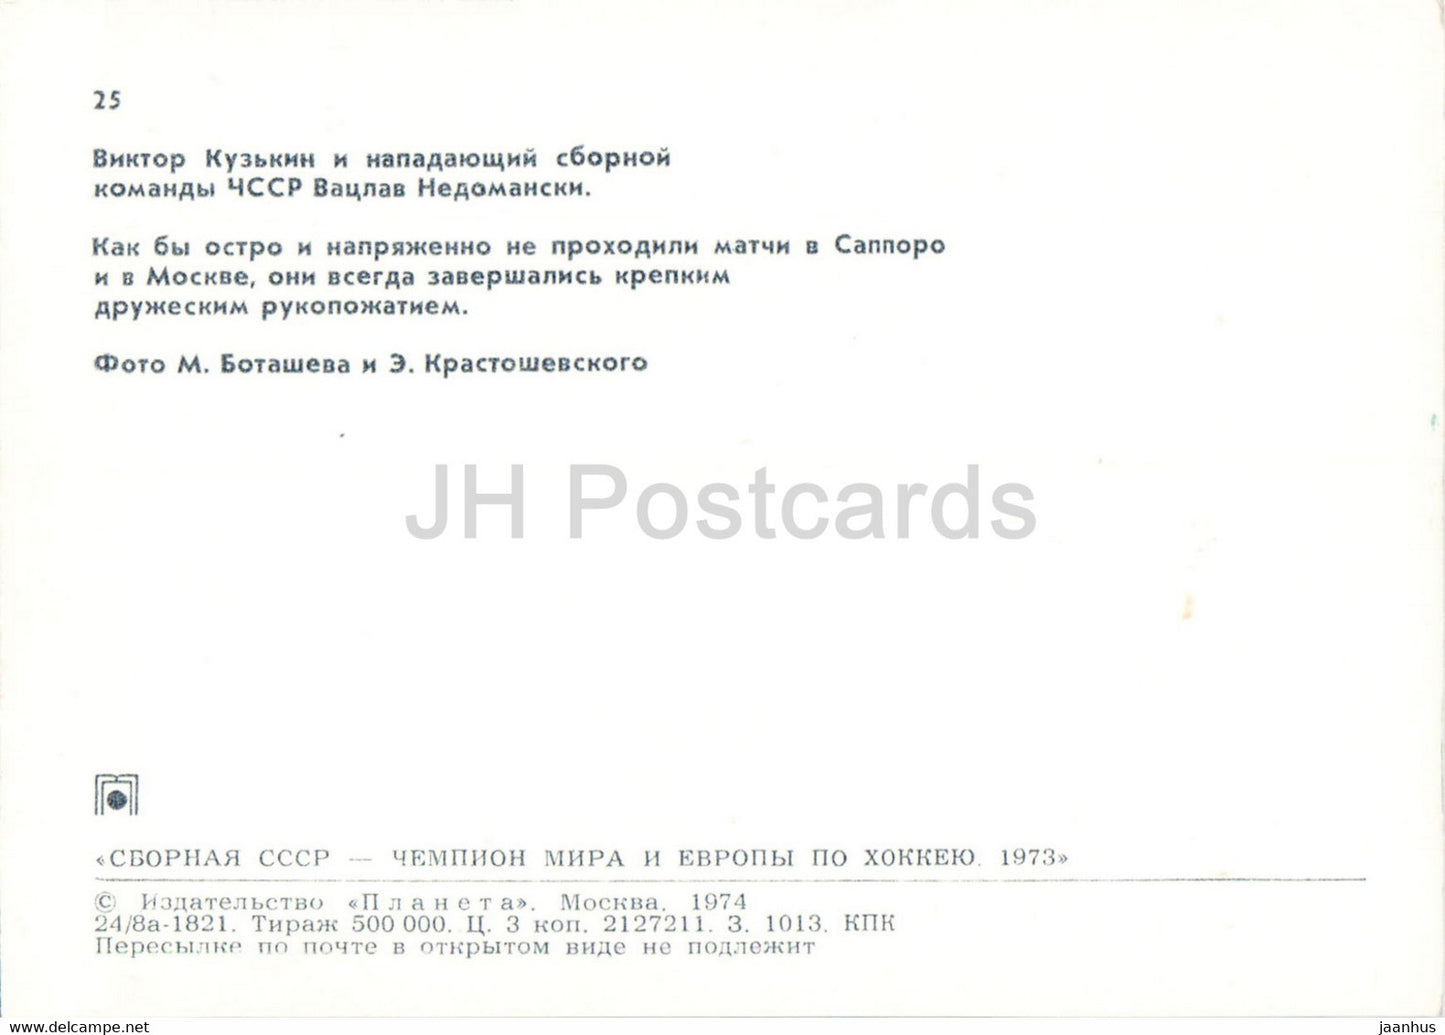 Viktor Kuzkin - Vaclav Nedomanski - Équipe de hockey sur glace de l'URSS - champion du monde 1973 - 1974 - Russie URSS - inutilisé